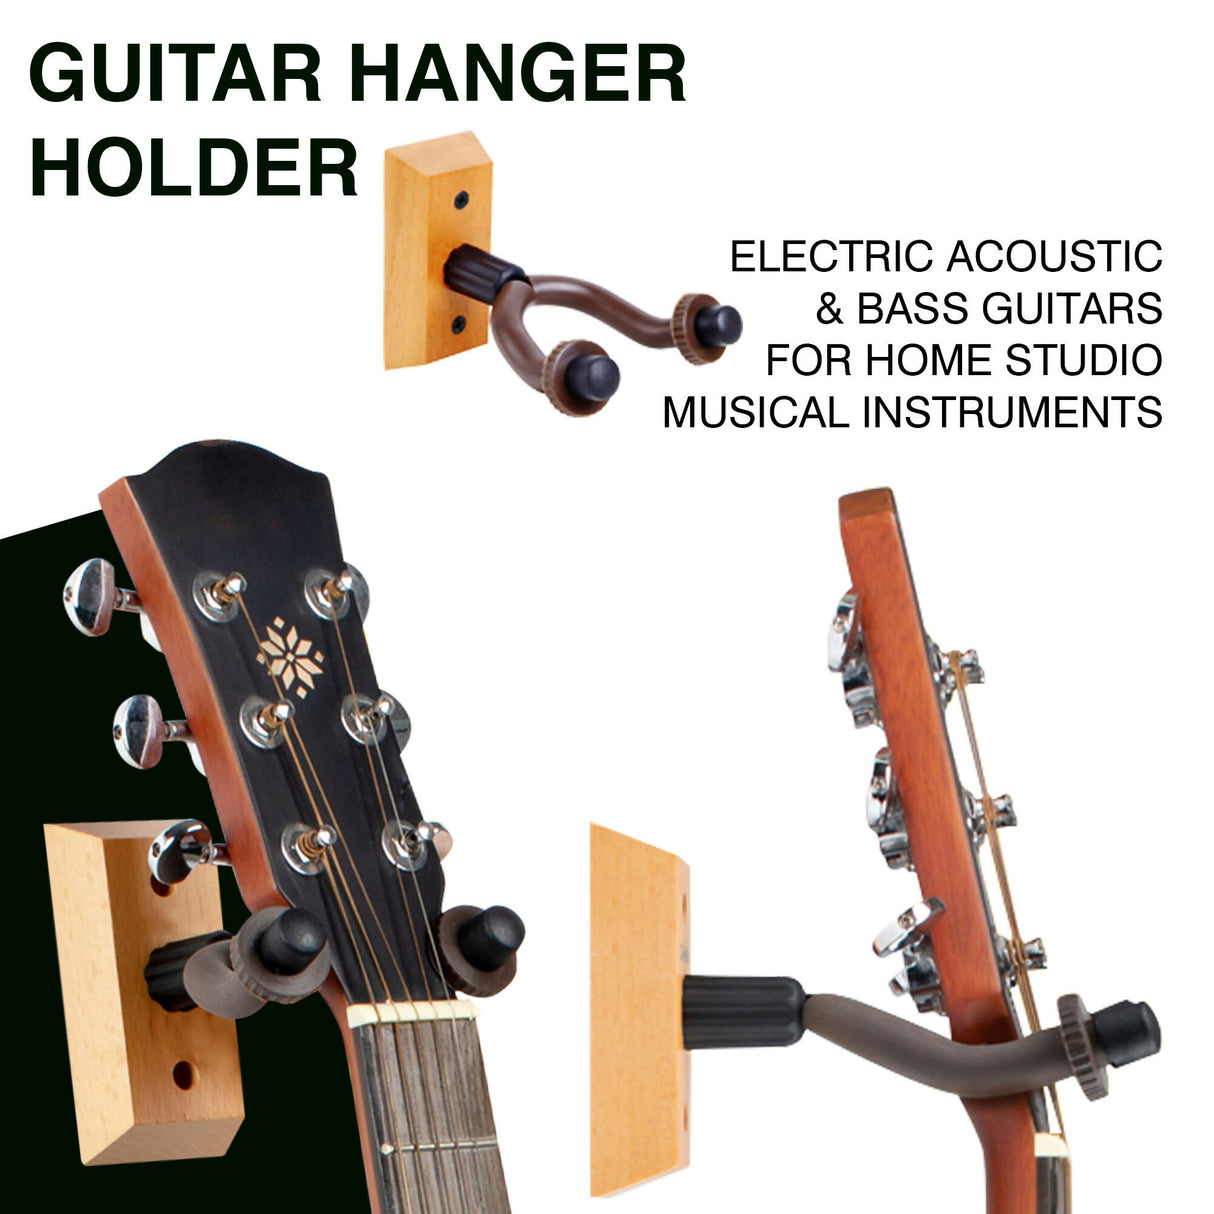 5 Core Guitar Wall Mount Hanger 2Pack U-Shaped Guitar Wall Hanger Hook Stand Wood Base